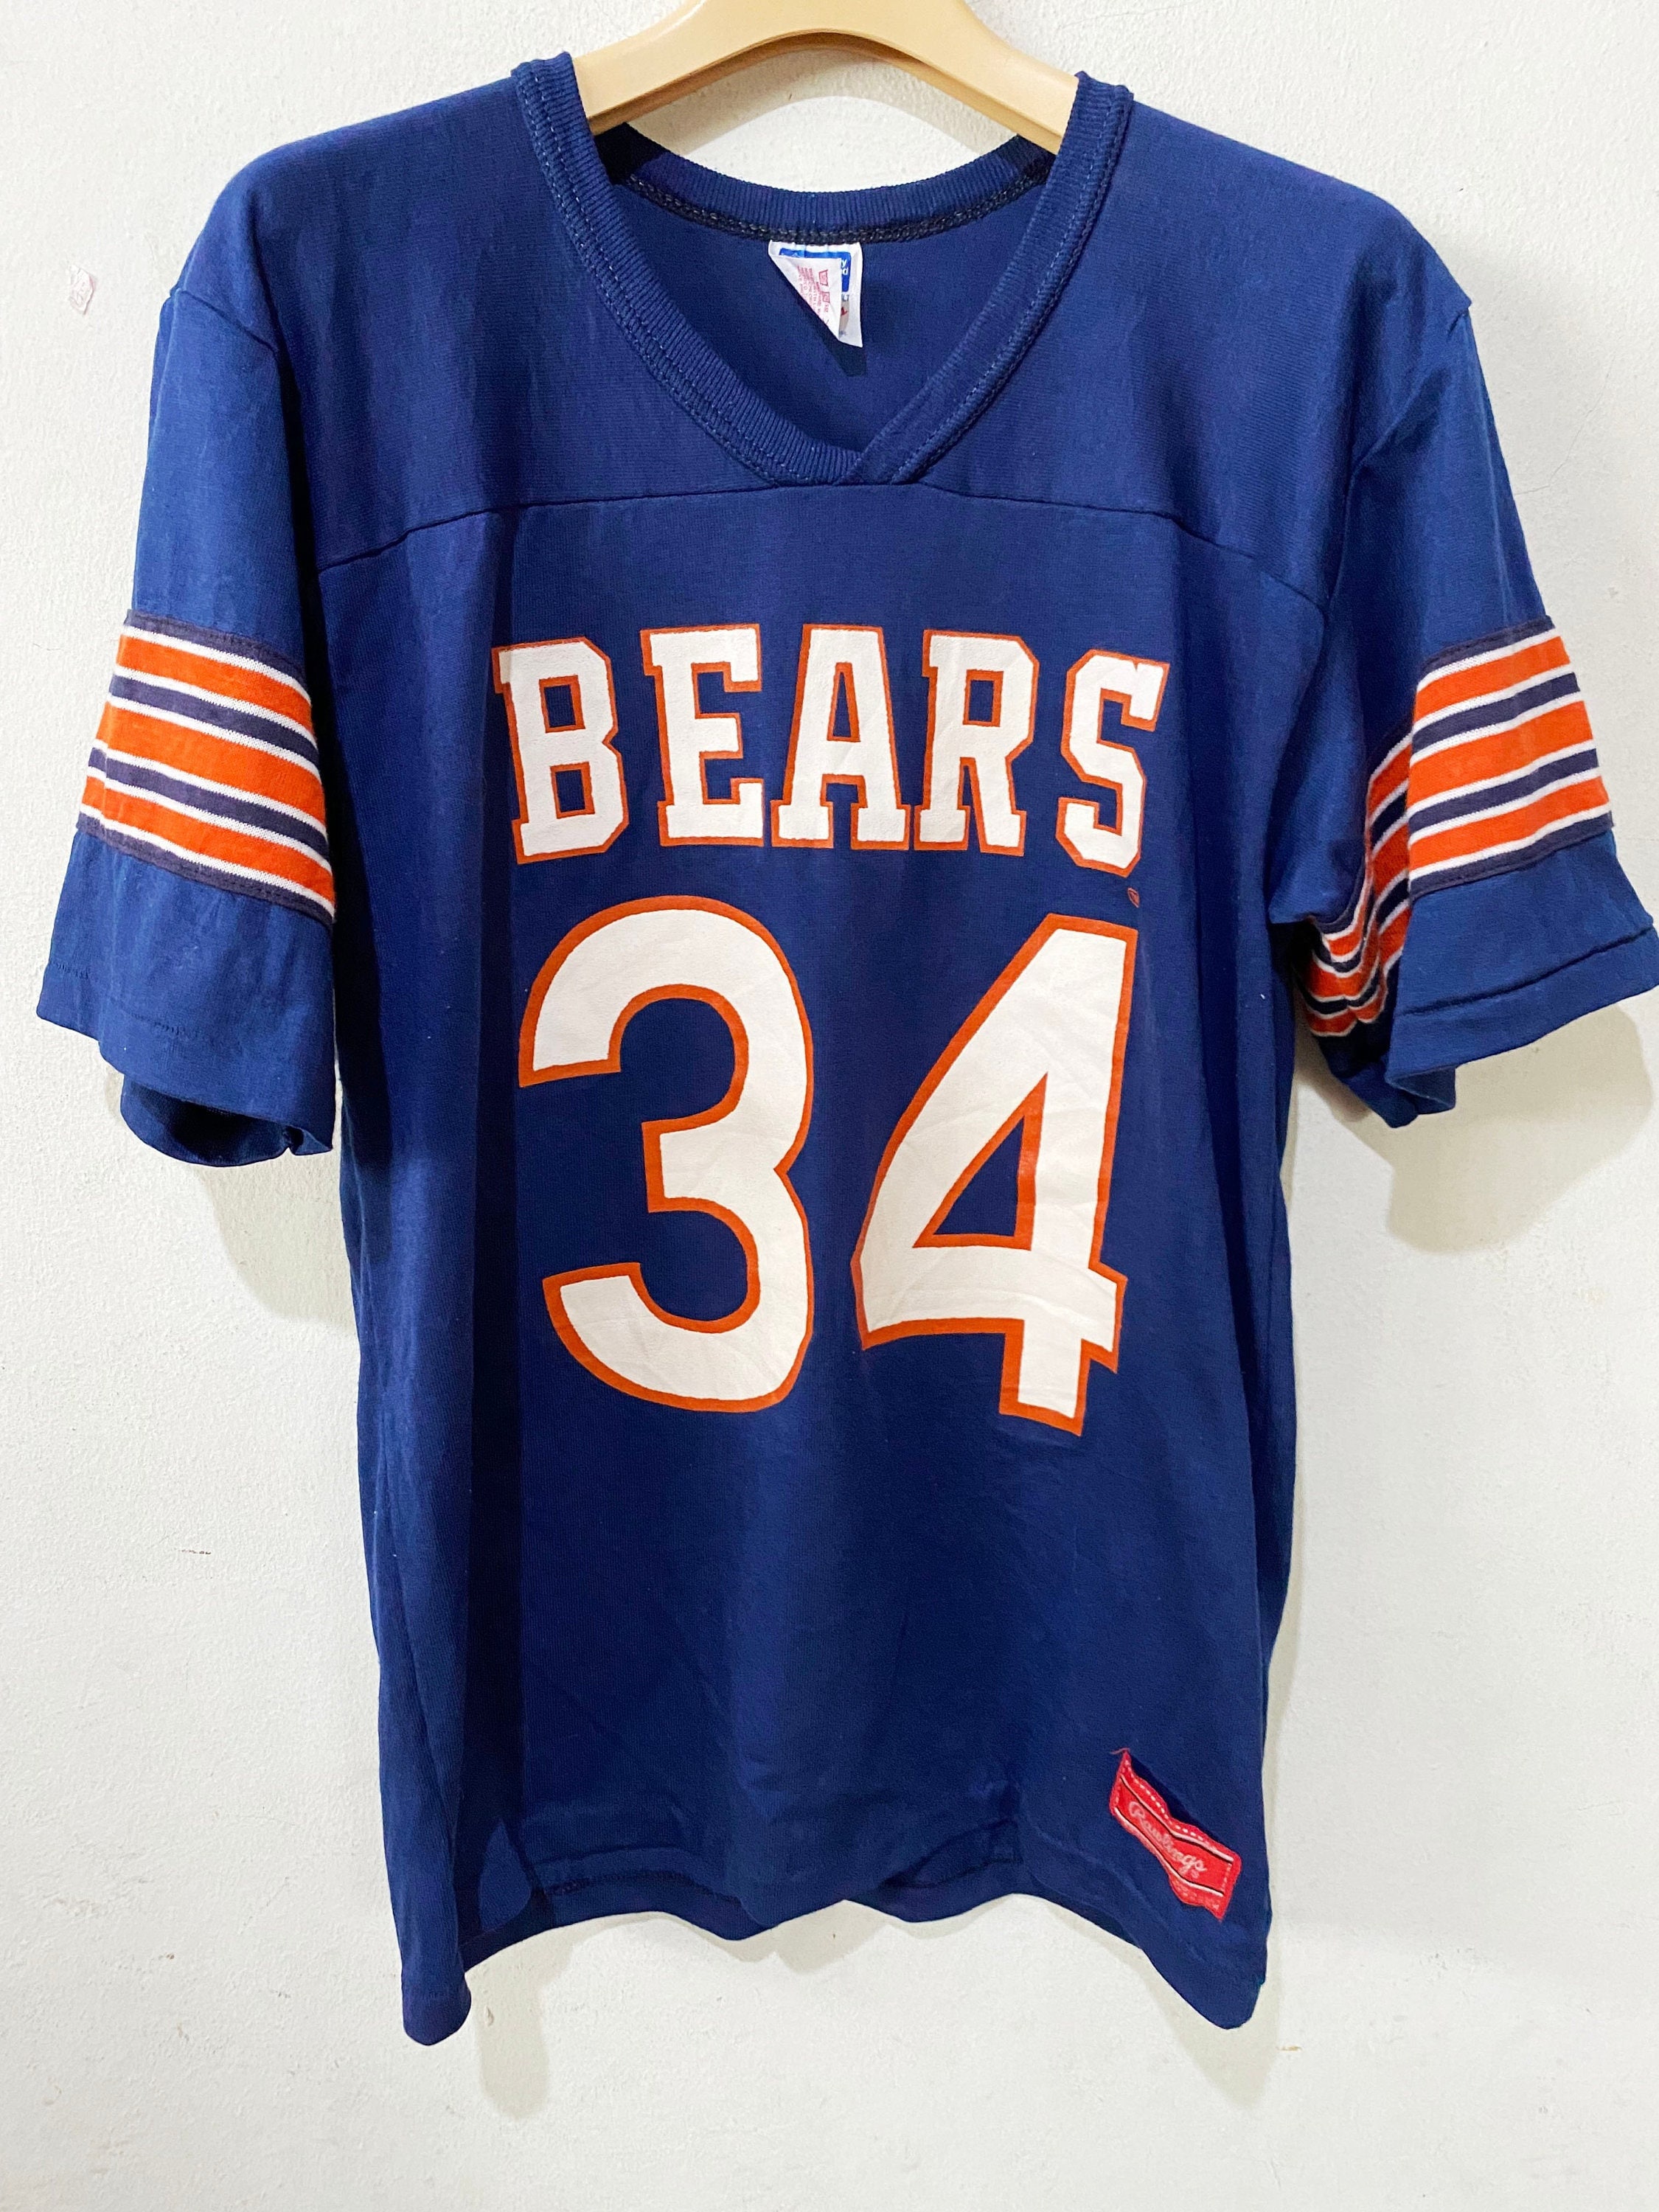 Chicago Bears Throwback Jerseys, Vintage NFL Gear